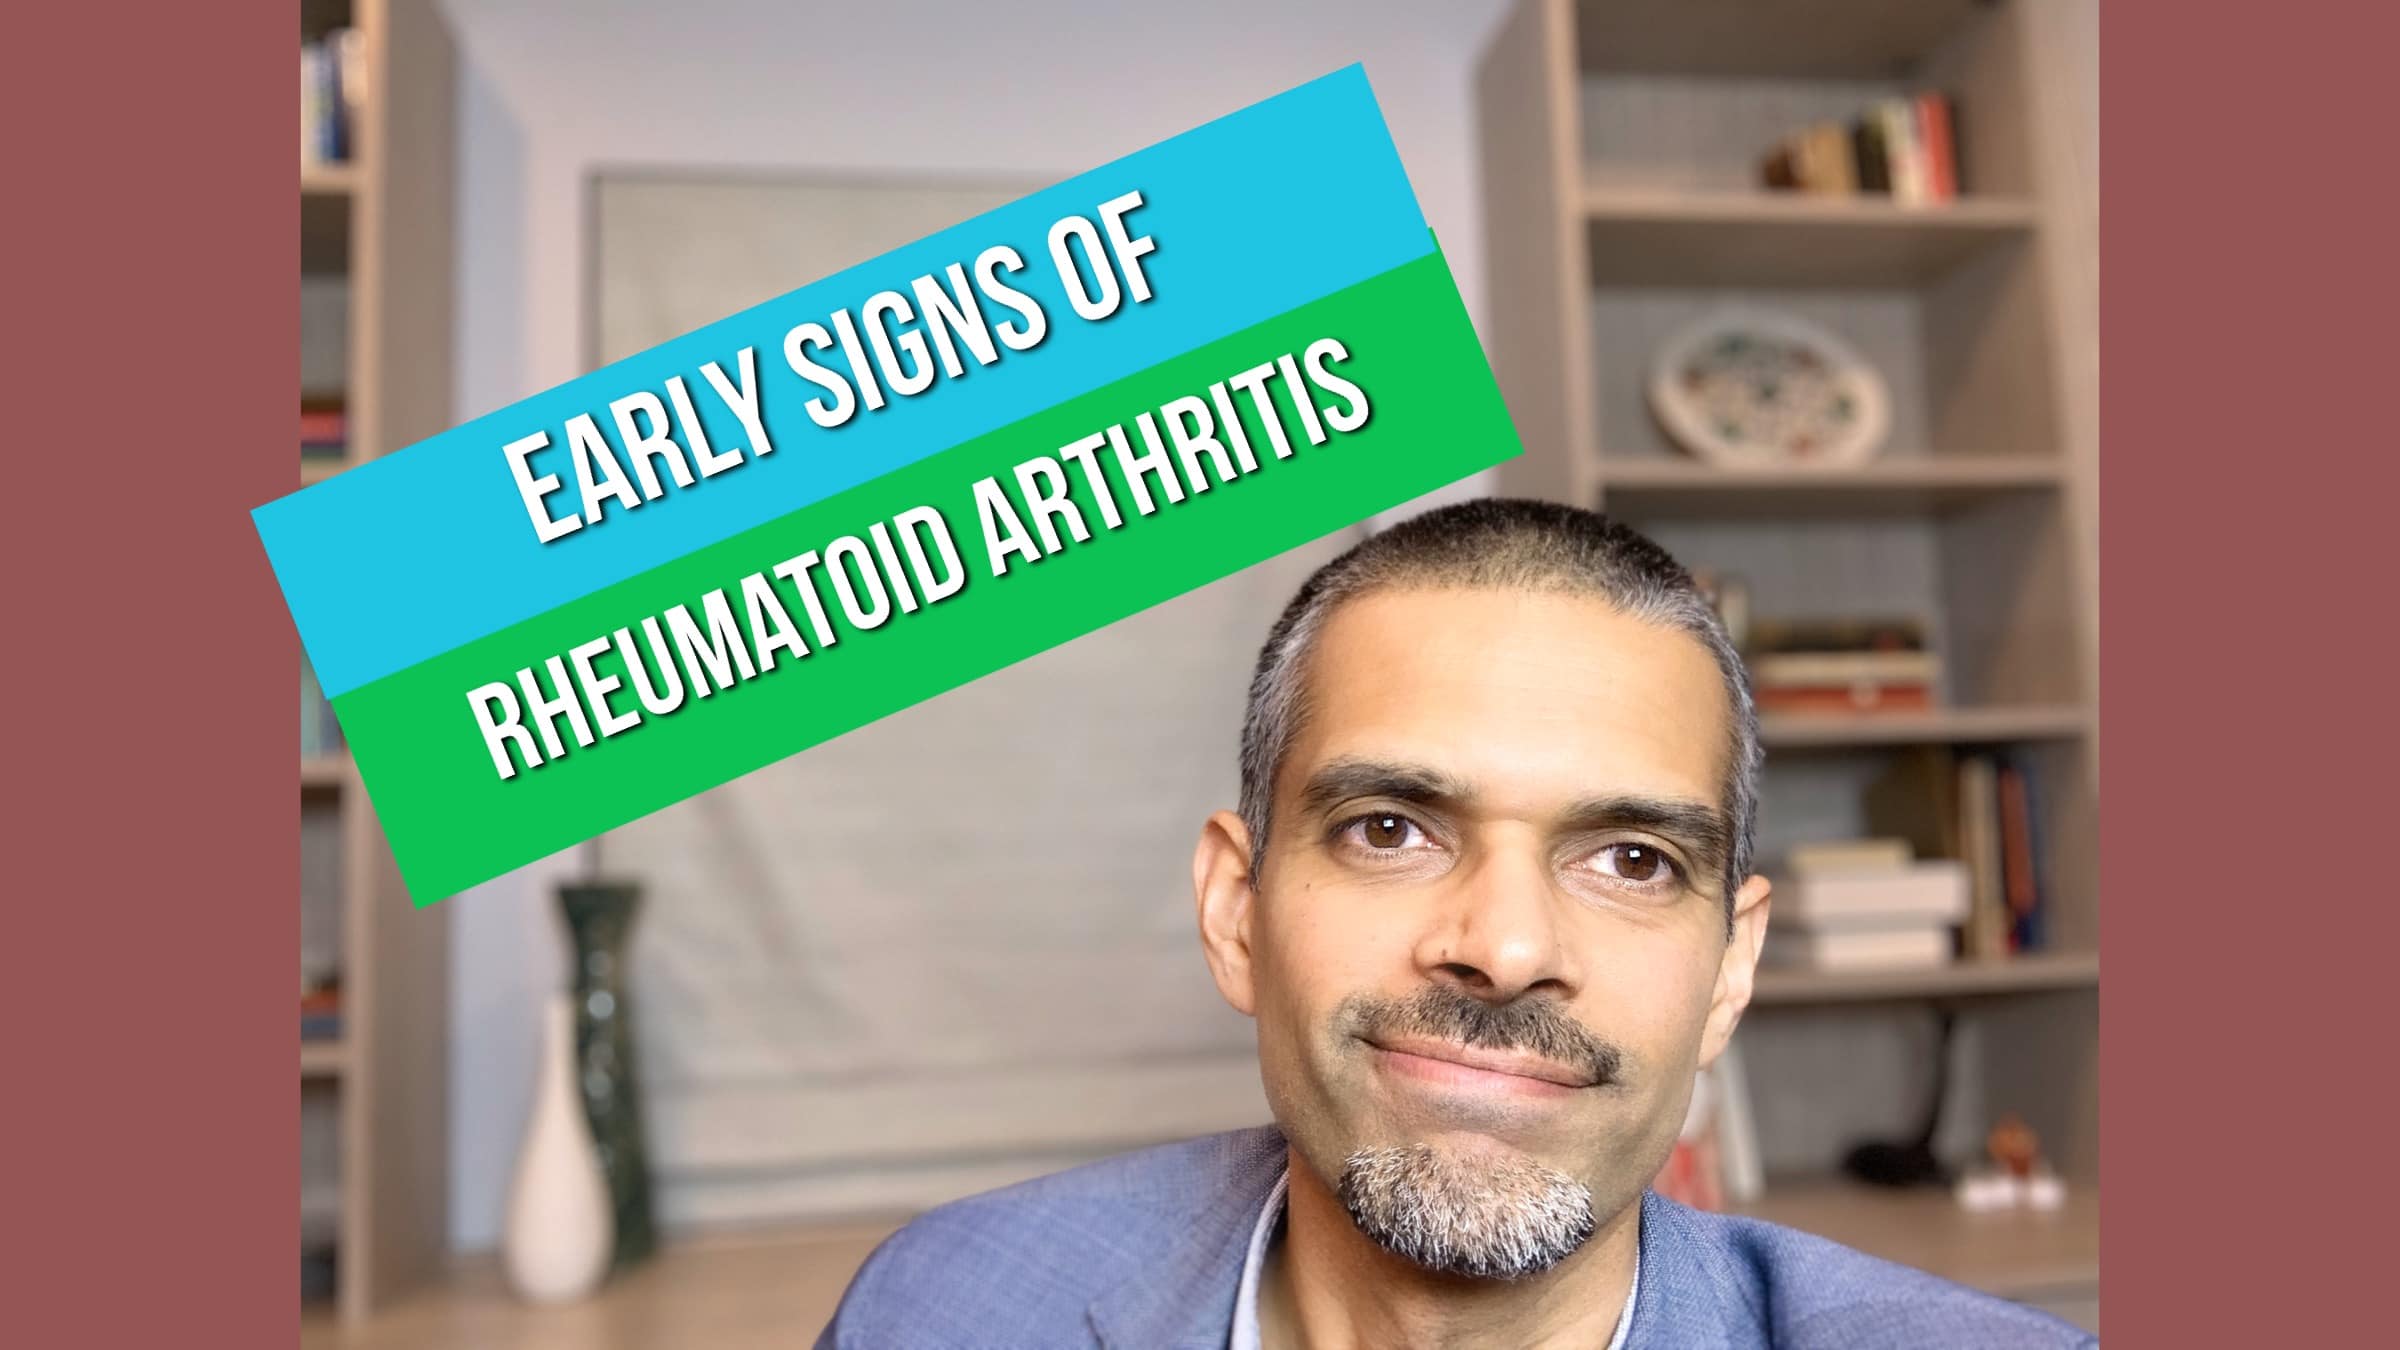 Rheumatoid arthritis symptoms- What are the first signs of rheumatoid arthritis?